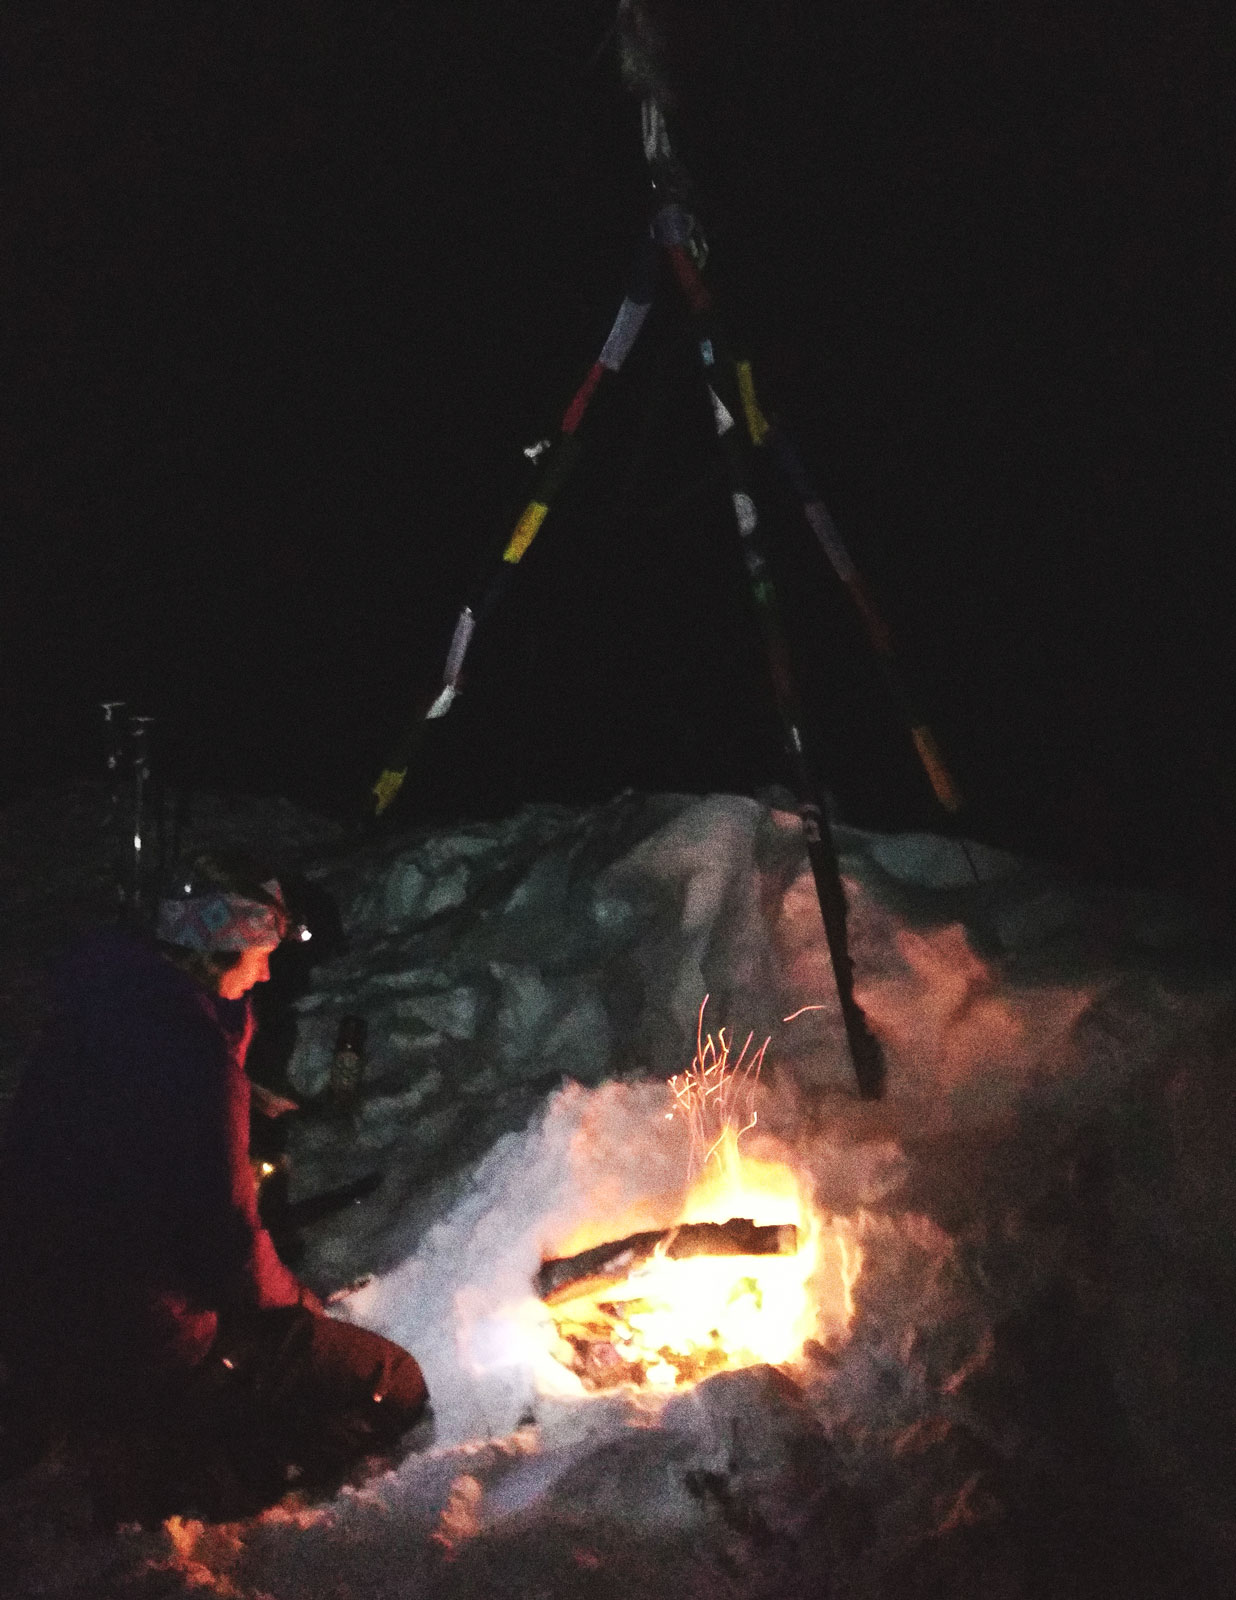 Burning the Yule log